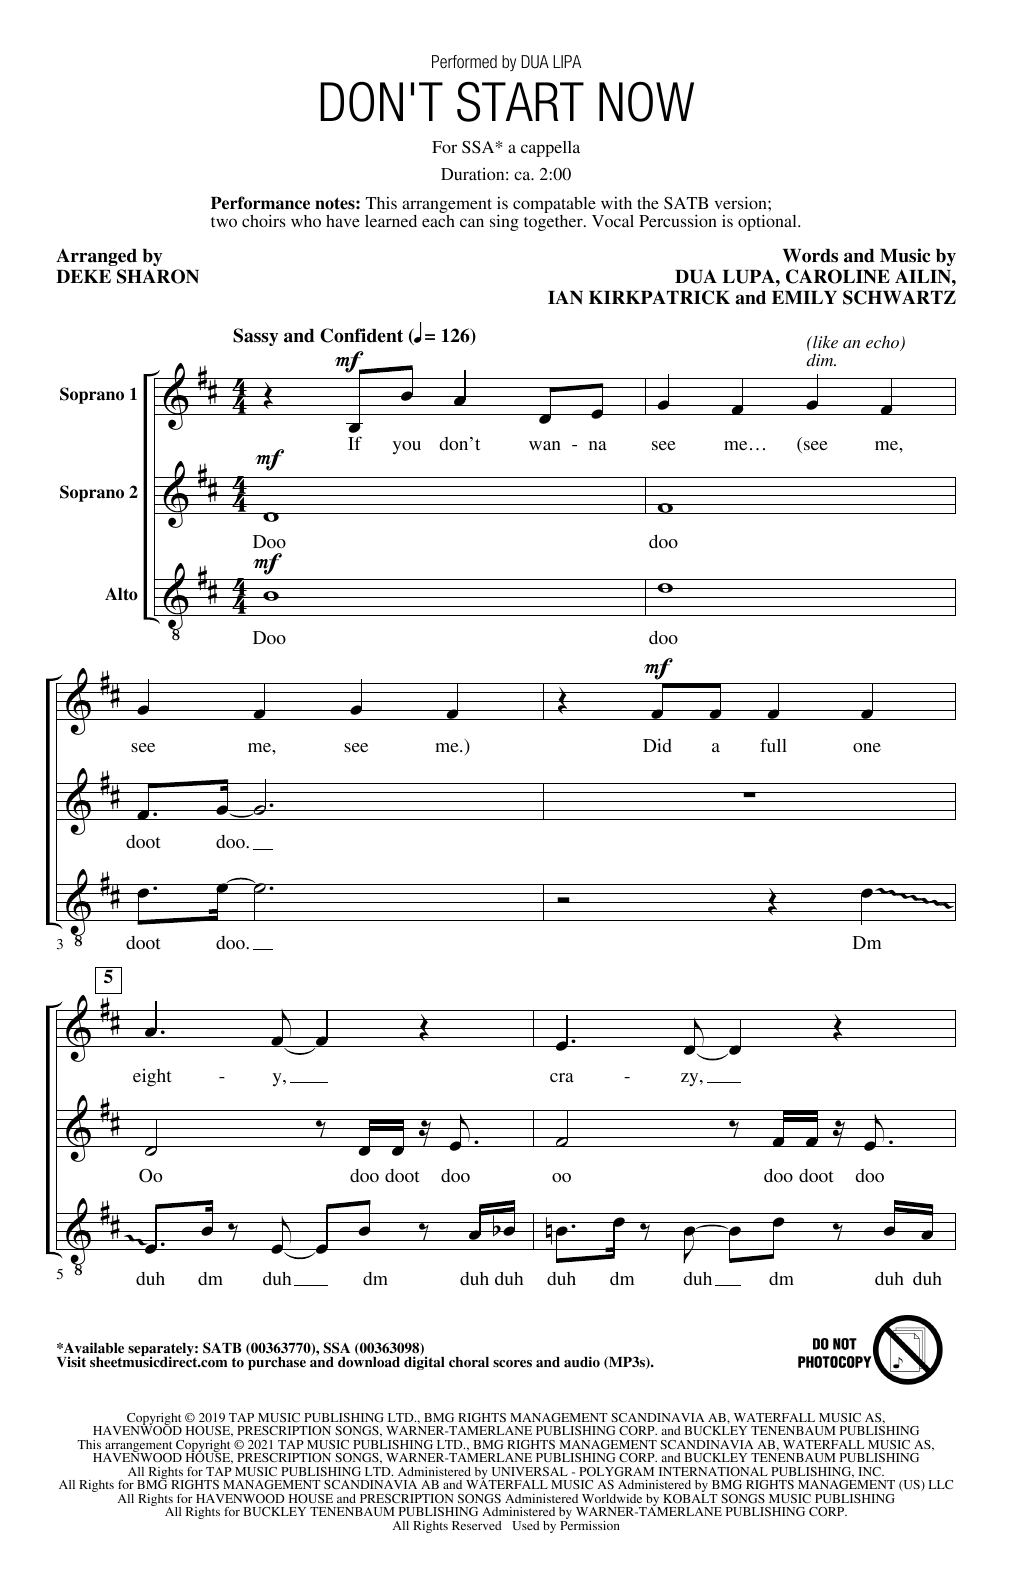 Dua Lipa Don't Start Now (arr. Deke Sharon) Sheet Music Notes & Chords for SSA Choir - Download or Print PDF